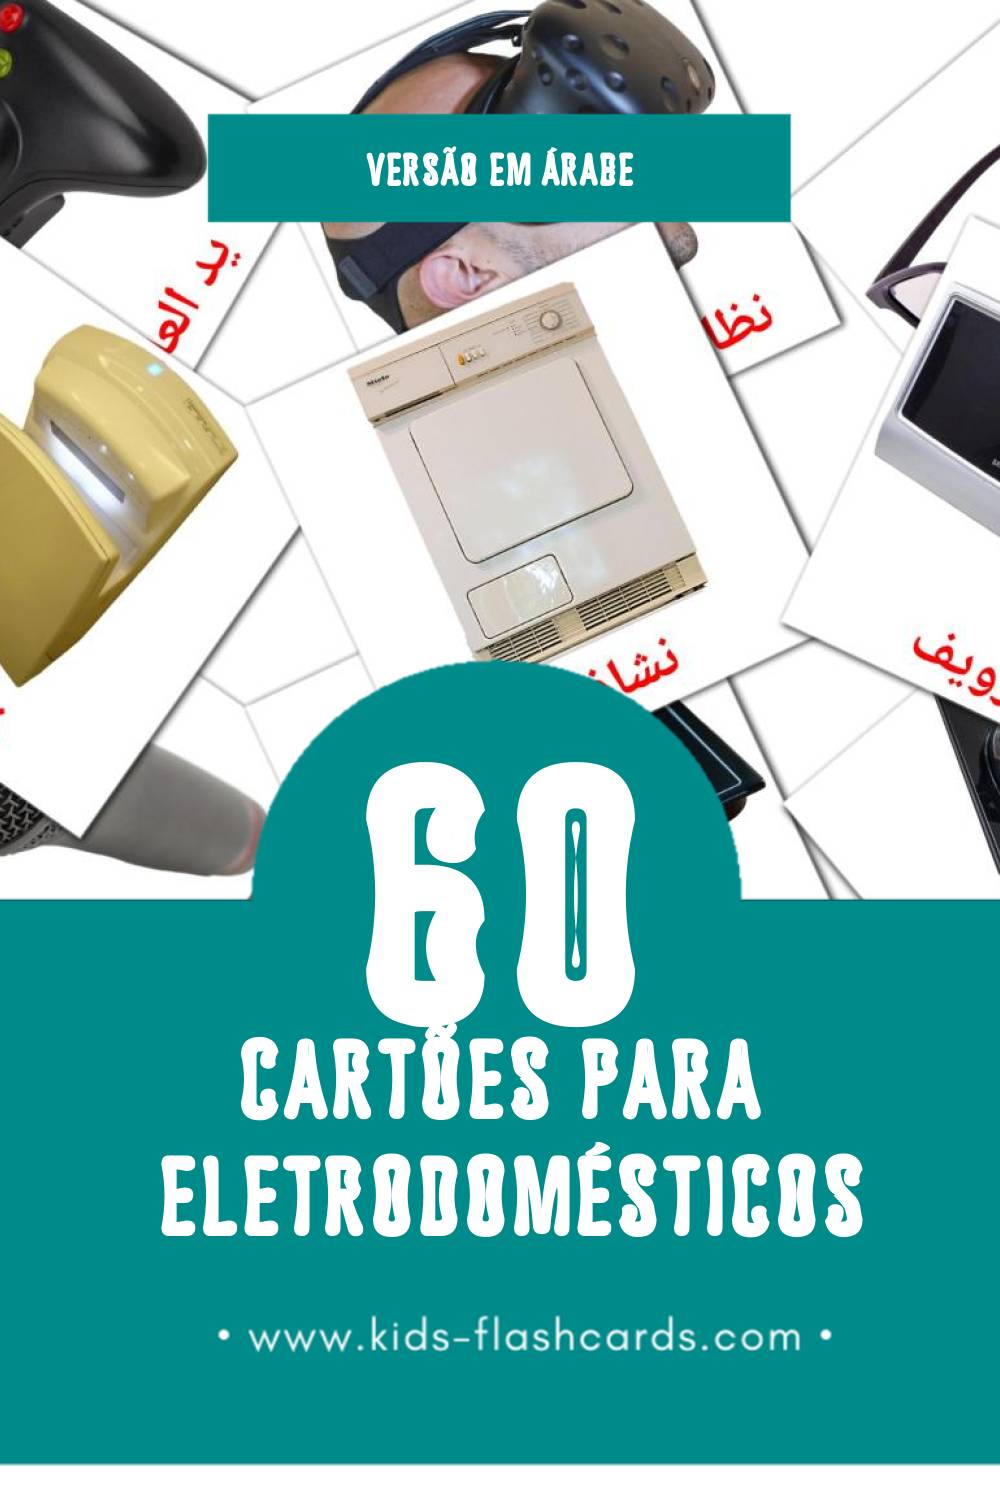 Flashcards de أجهزة منزلية Visuais para Toddlers (60 cartões em Árabe)